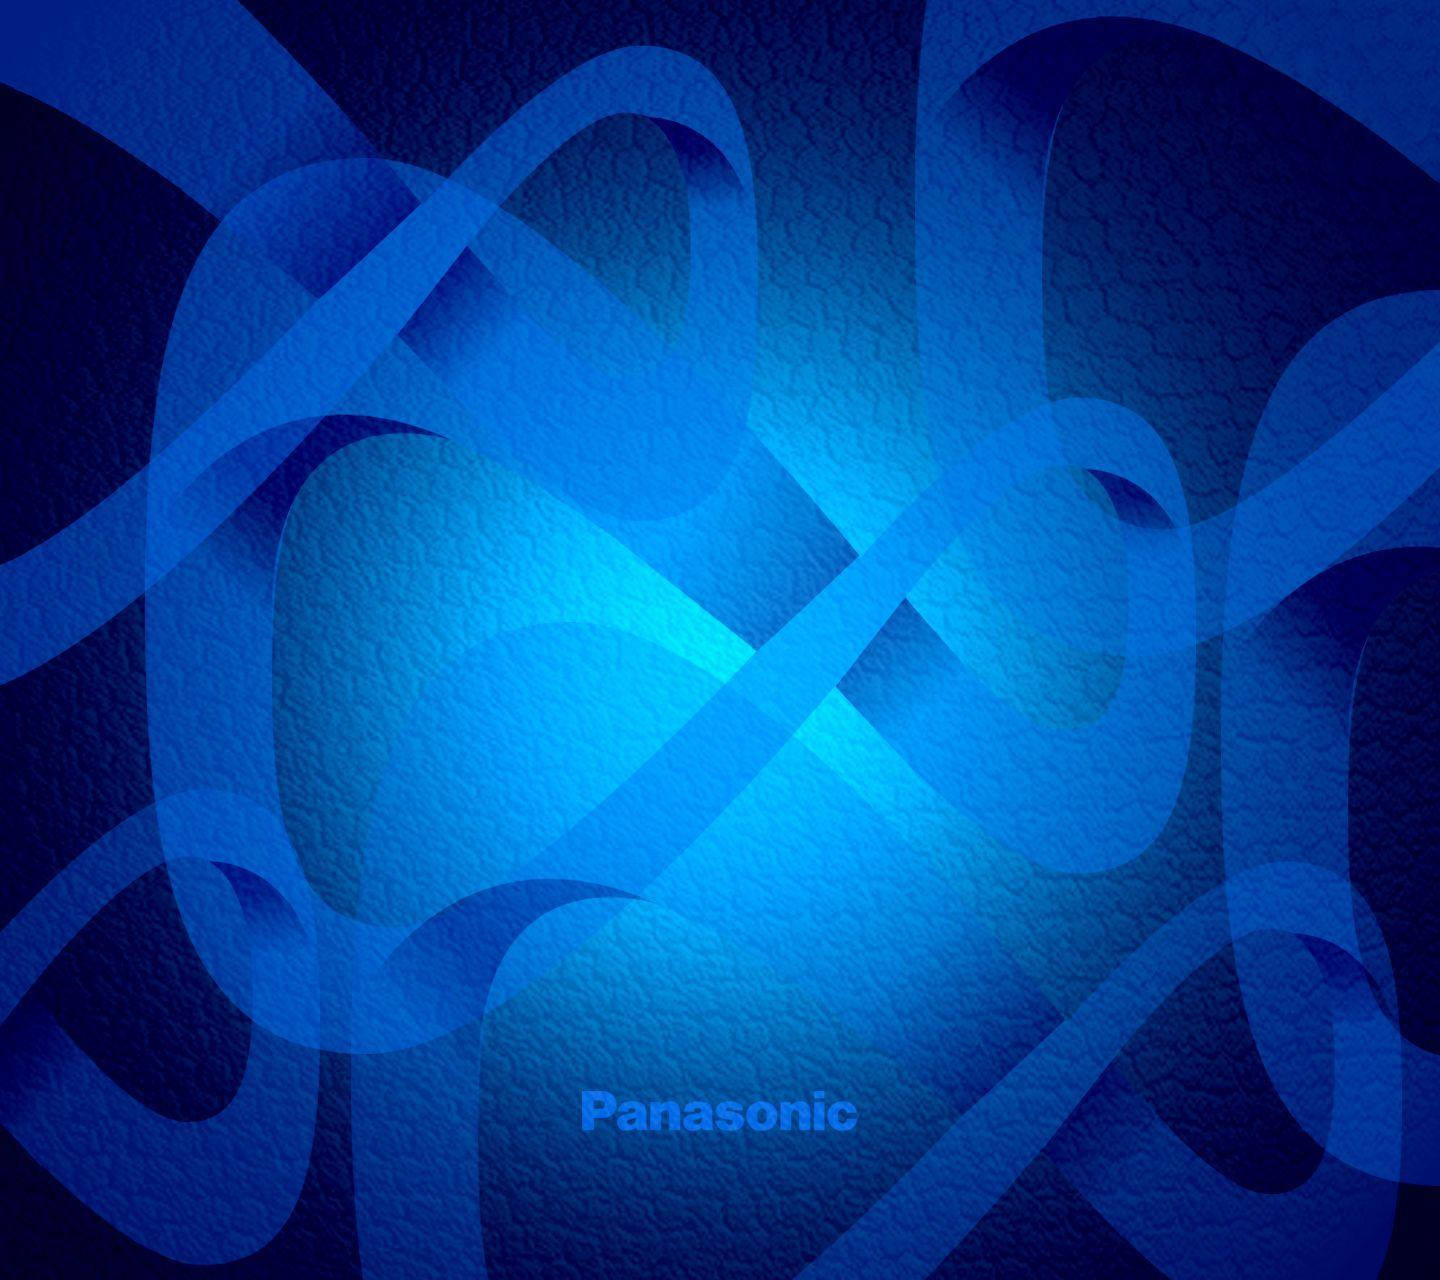 Panasonic Blue Abstract